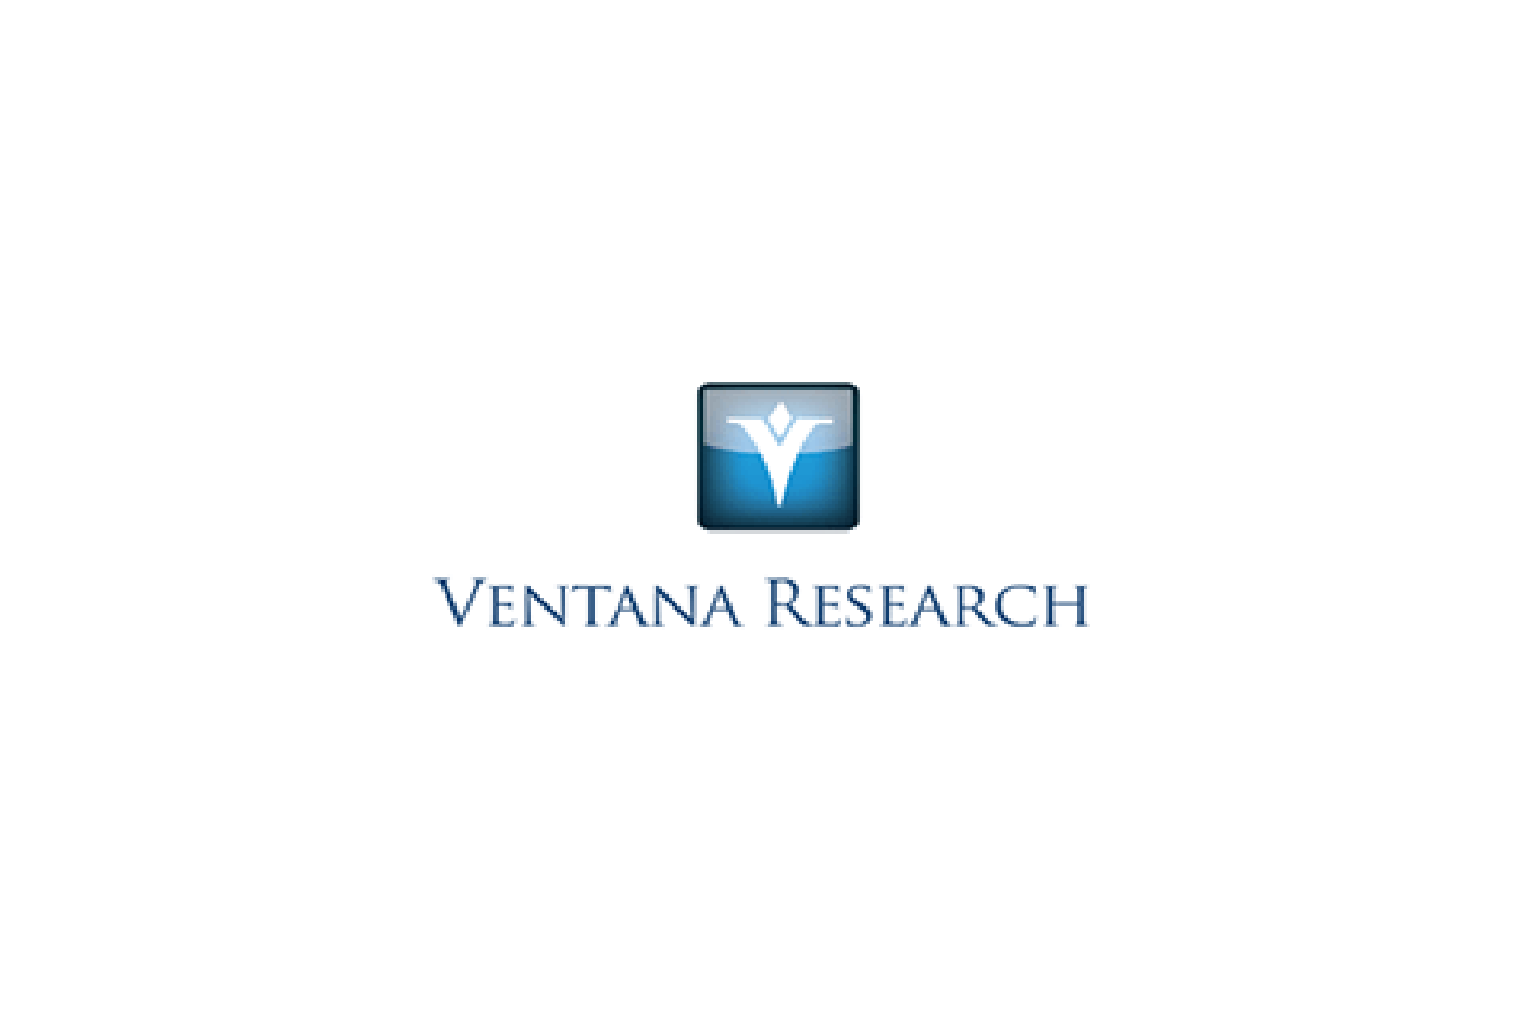 Ventana Research logo image